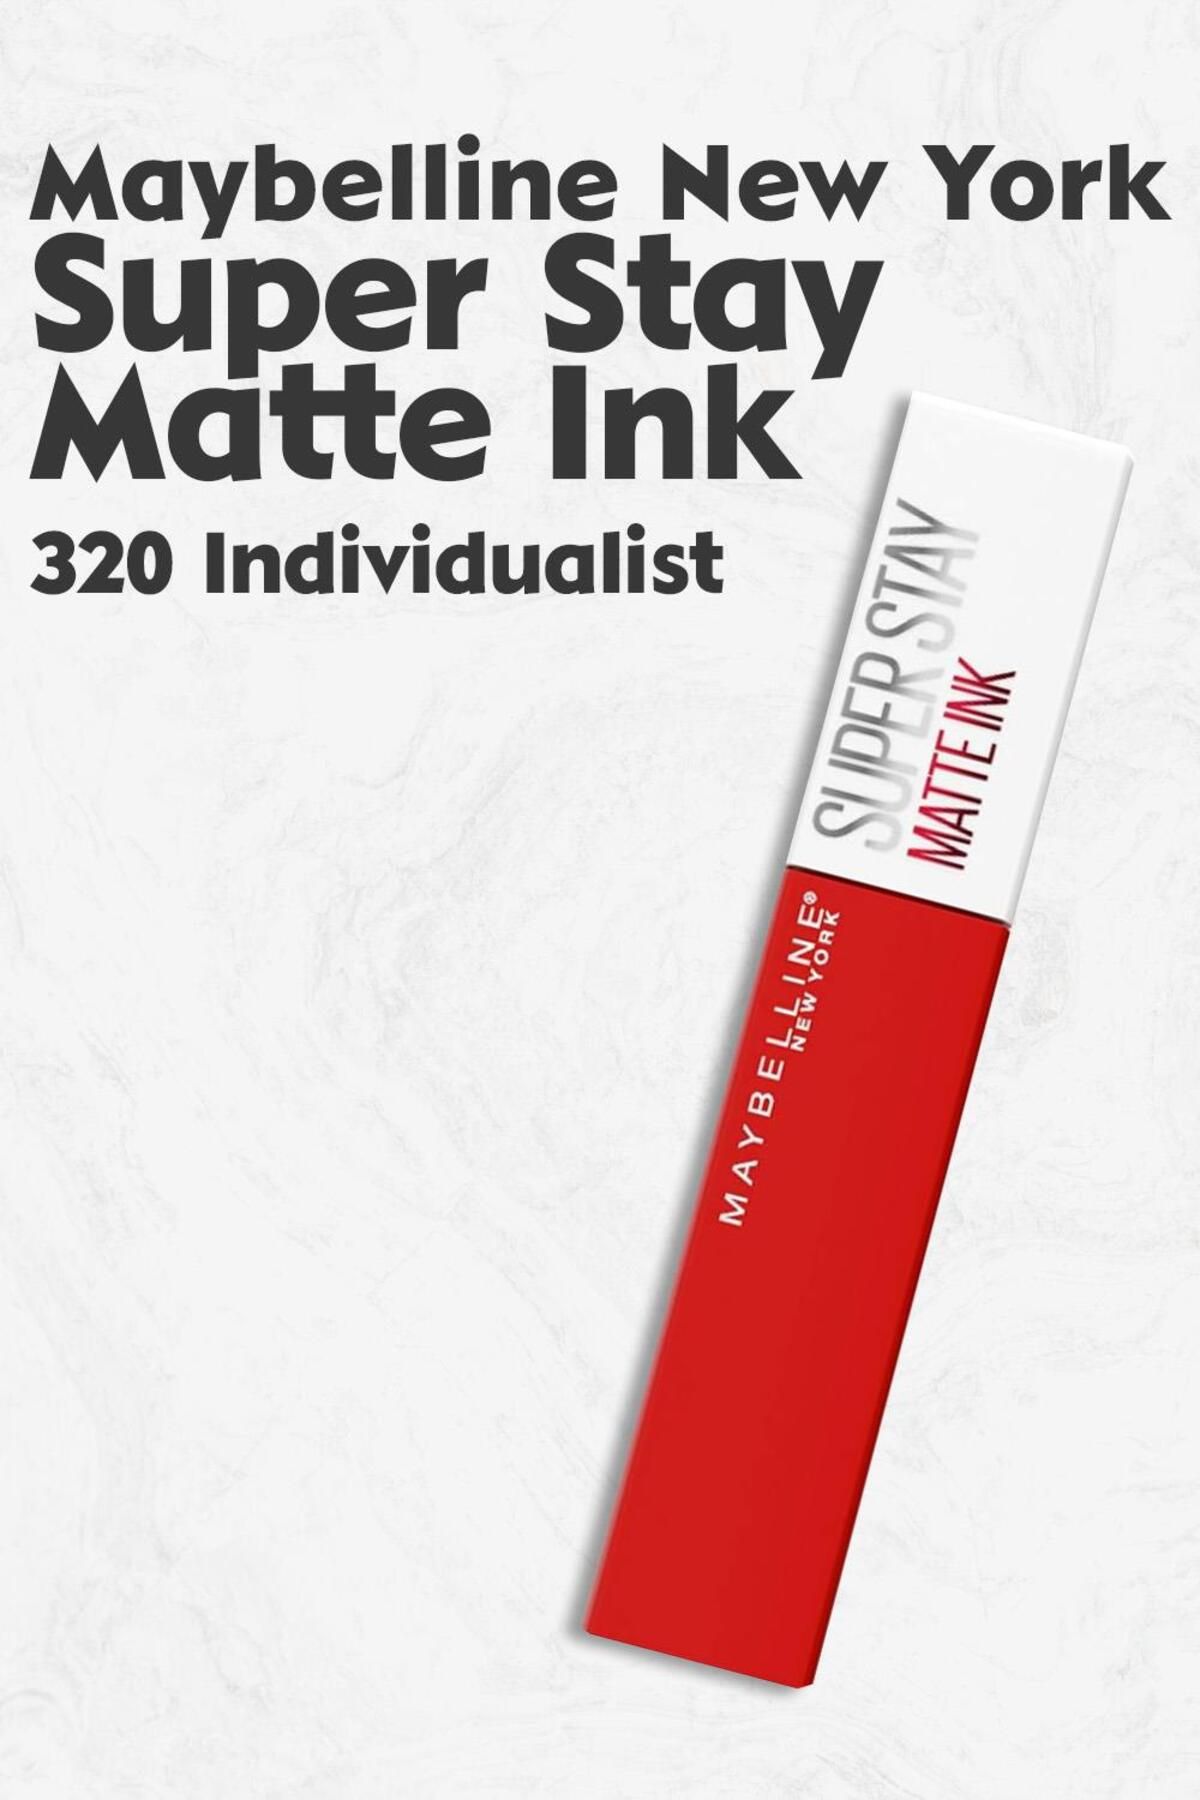 Maybelline New York Super Stay Matte Ink 320 Individualist